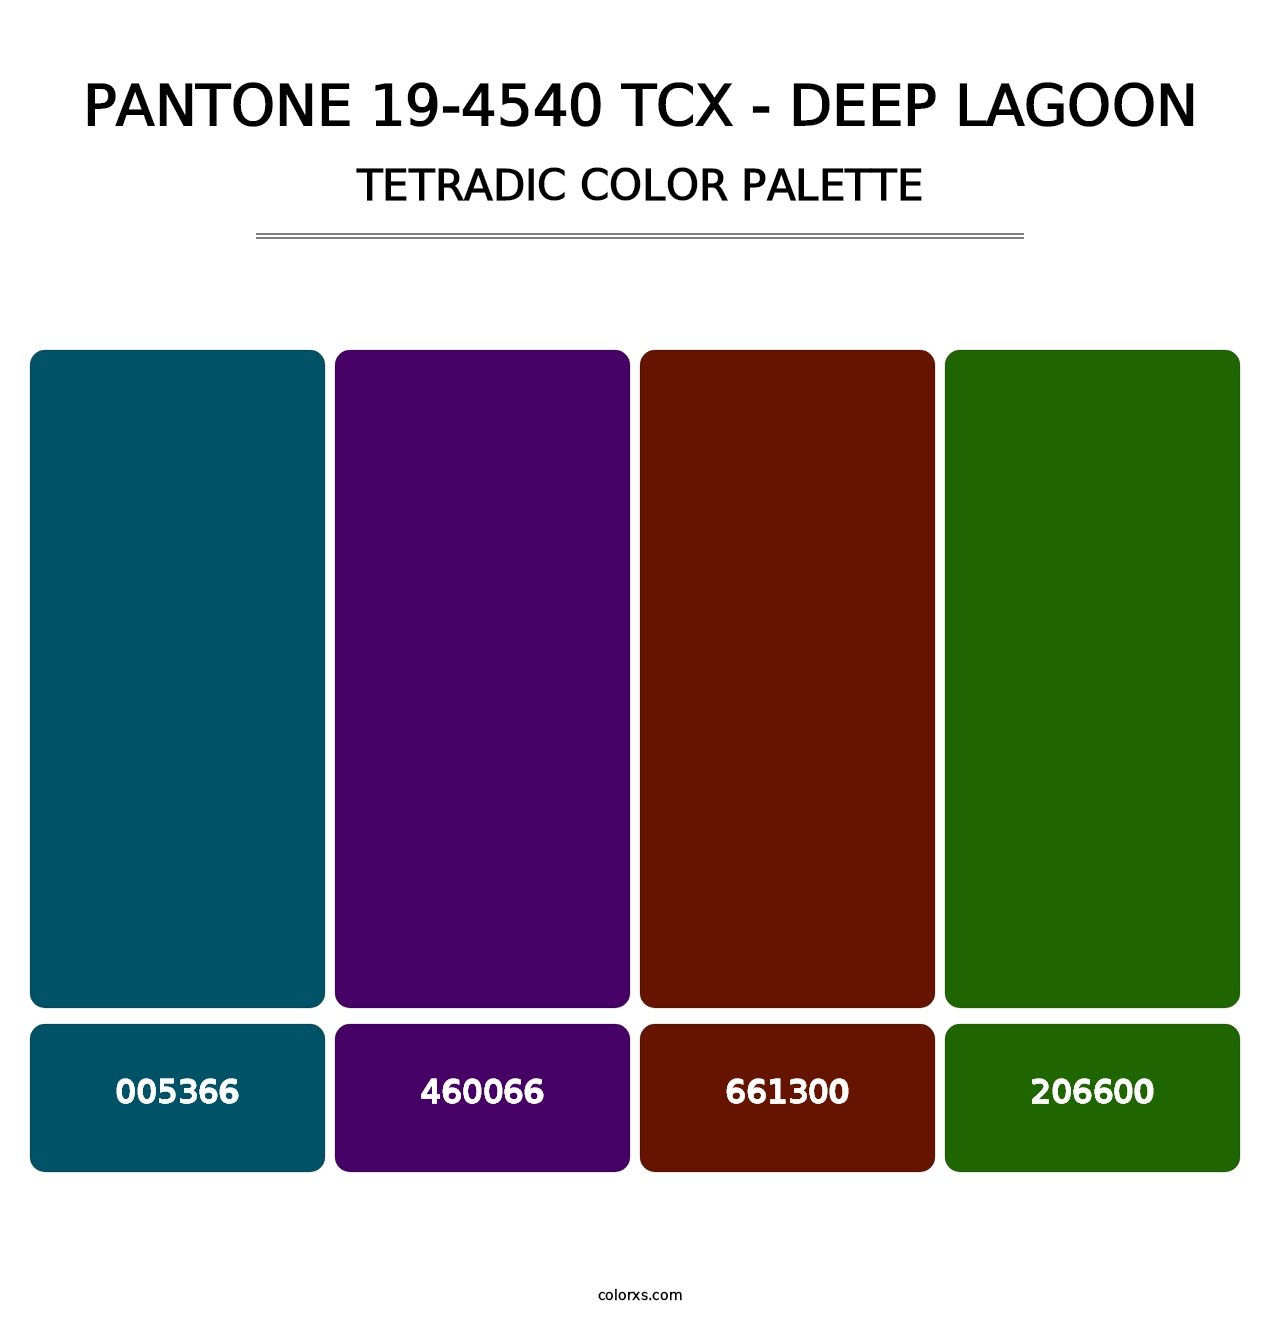 PANTONE 19-4540 TCX - Deep Lagoon - Tetradic Color Palette